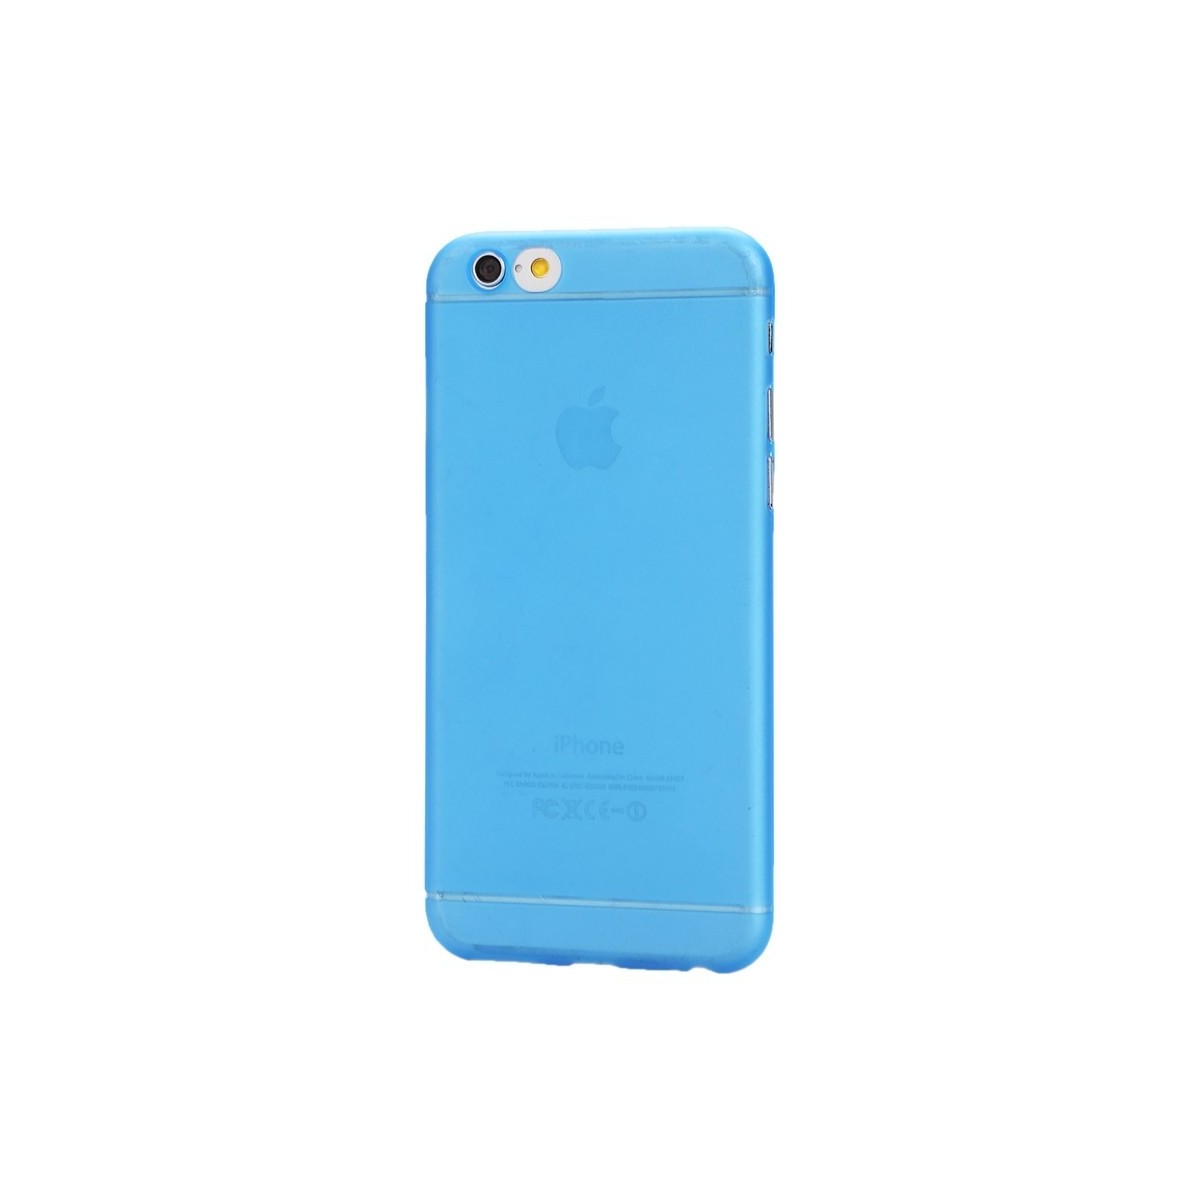 Coque Ultra Slim Translucide pour iPhone 6/6S Bleu